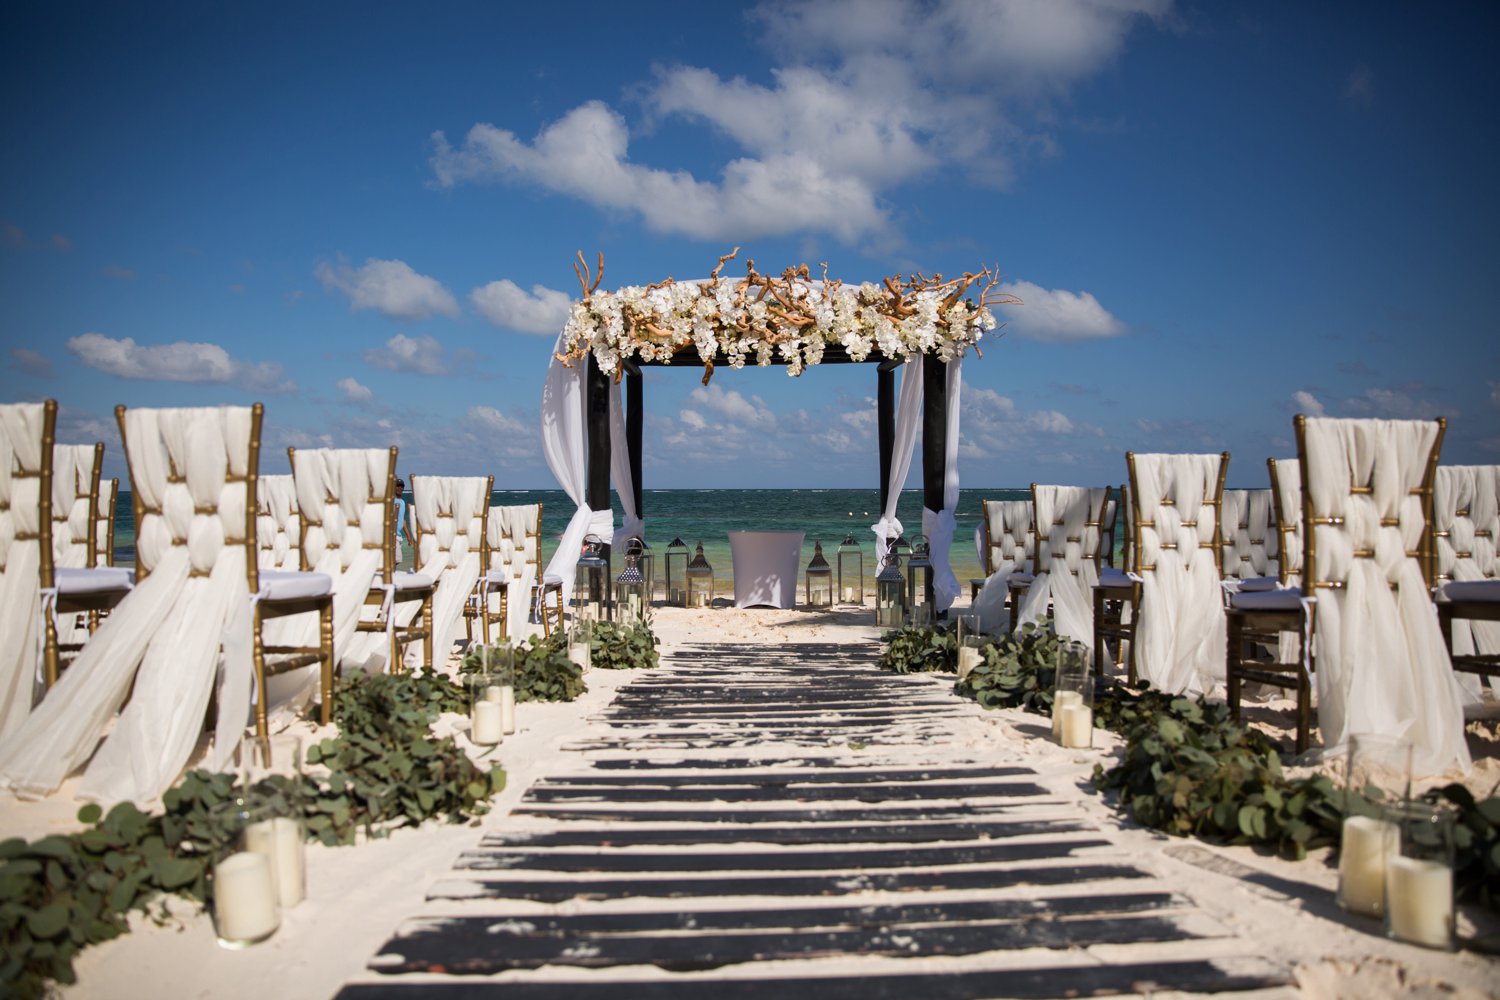  images by feliciathephotographer.com | destination wedding photographer | mexico | tropical | fiji | venue | azul beach resort | riviera maya | ceremony | white linen chairs | Beachwood aisle | candles | cabana | floral overhead | eucalyptus | 